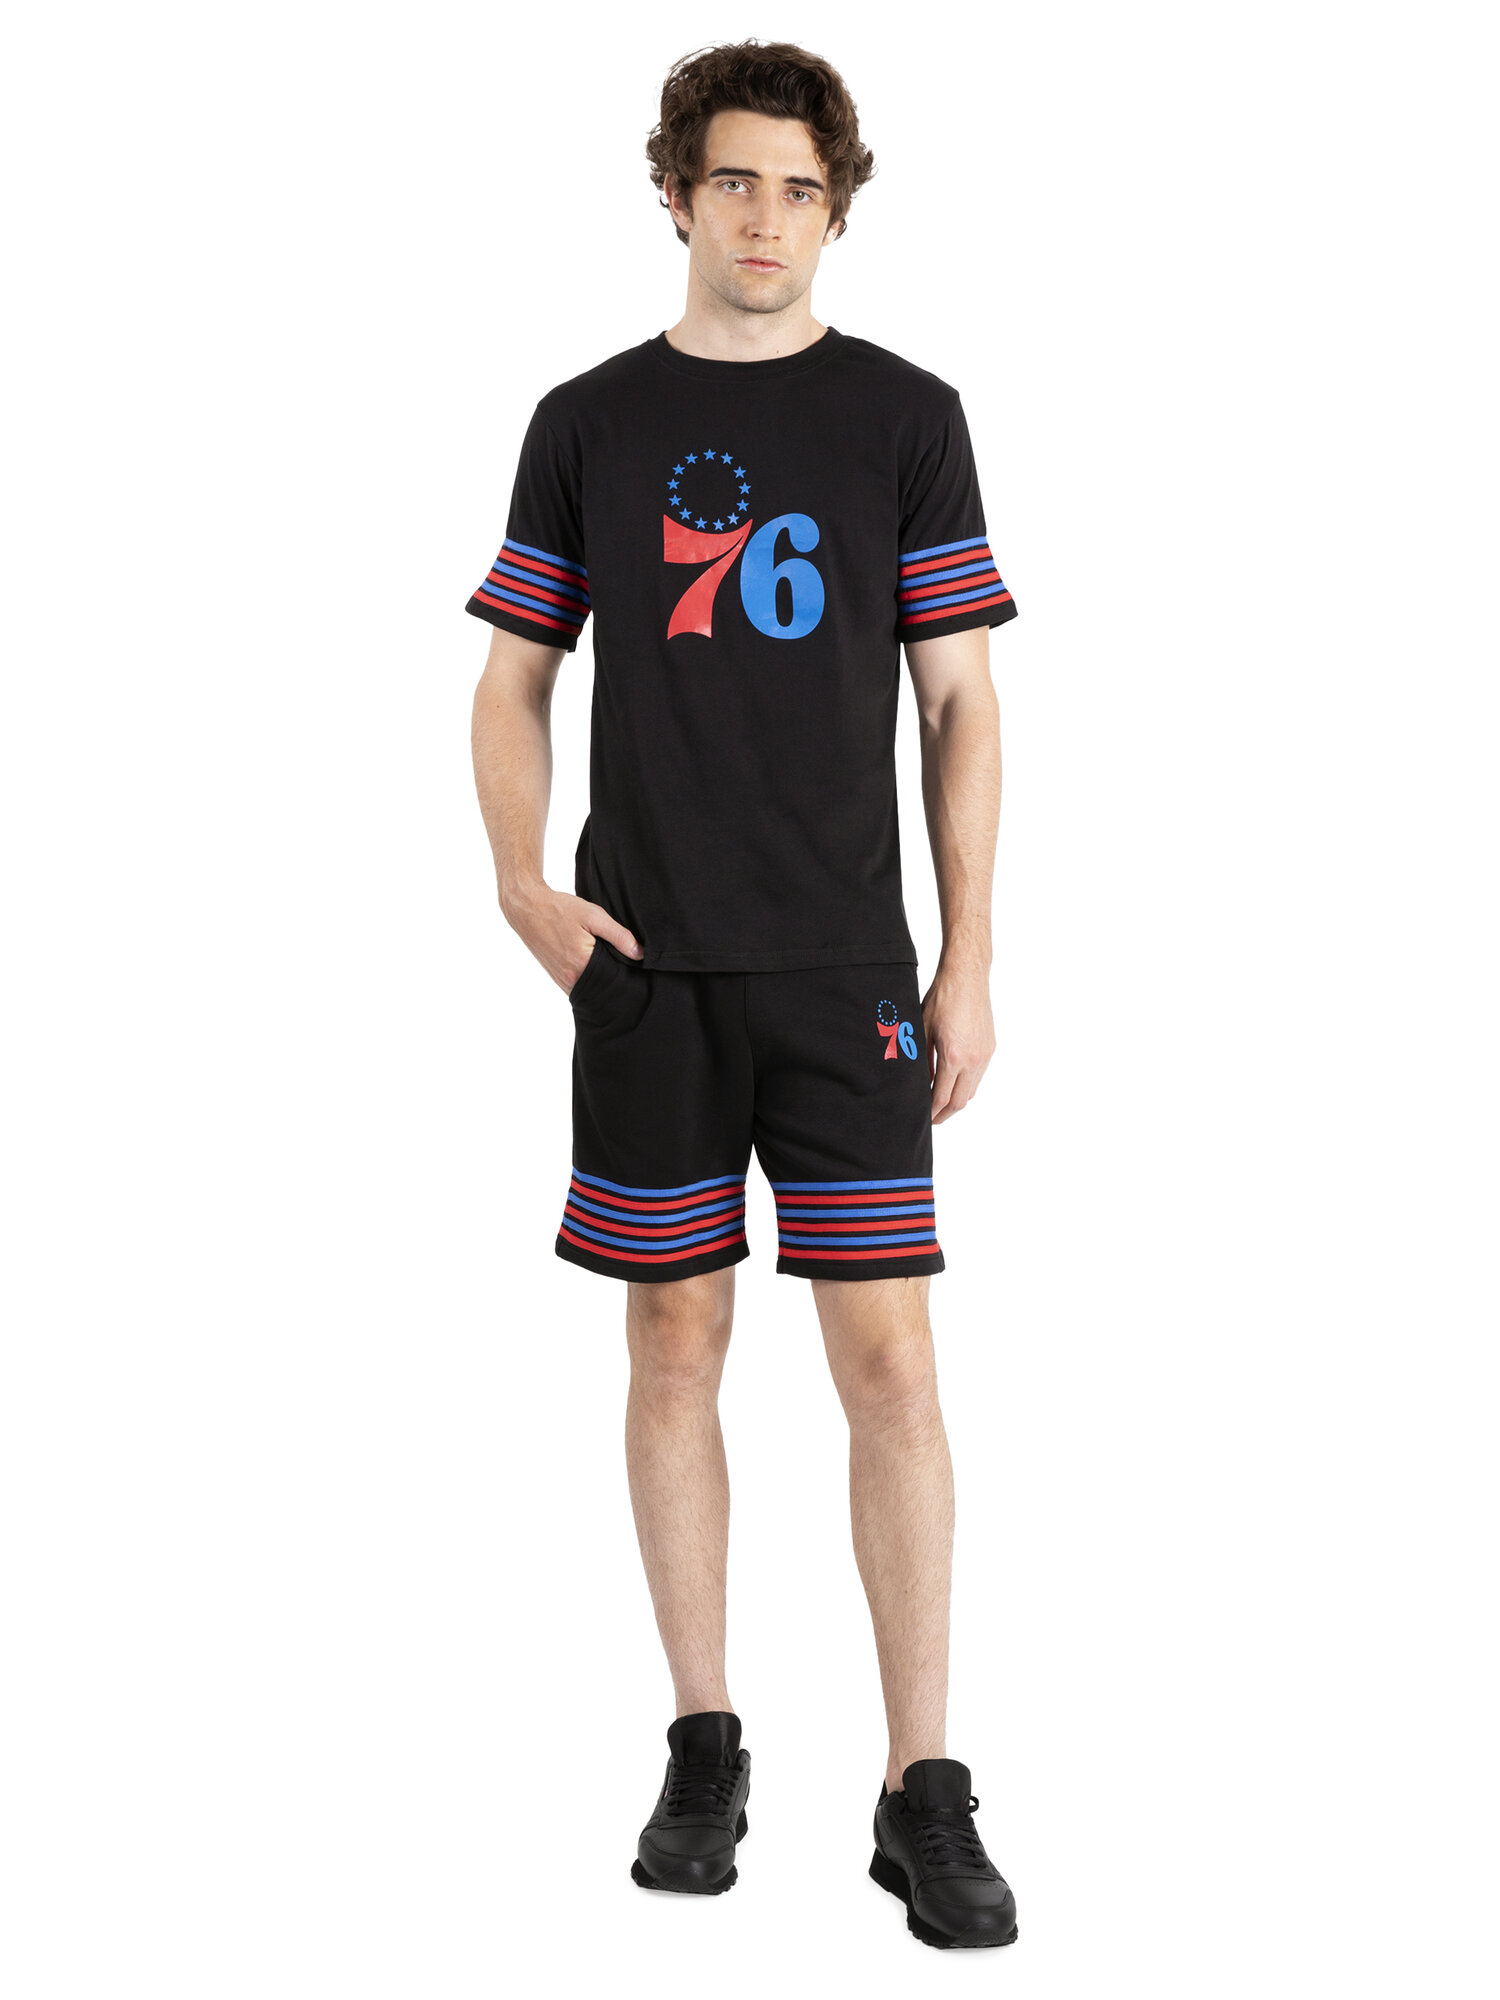 76ers black shorts